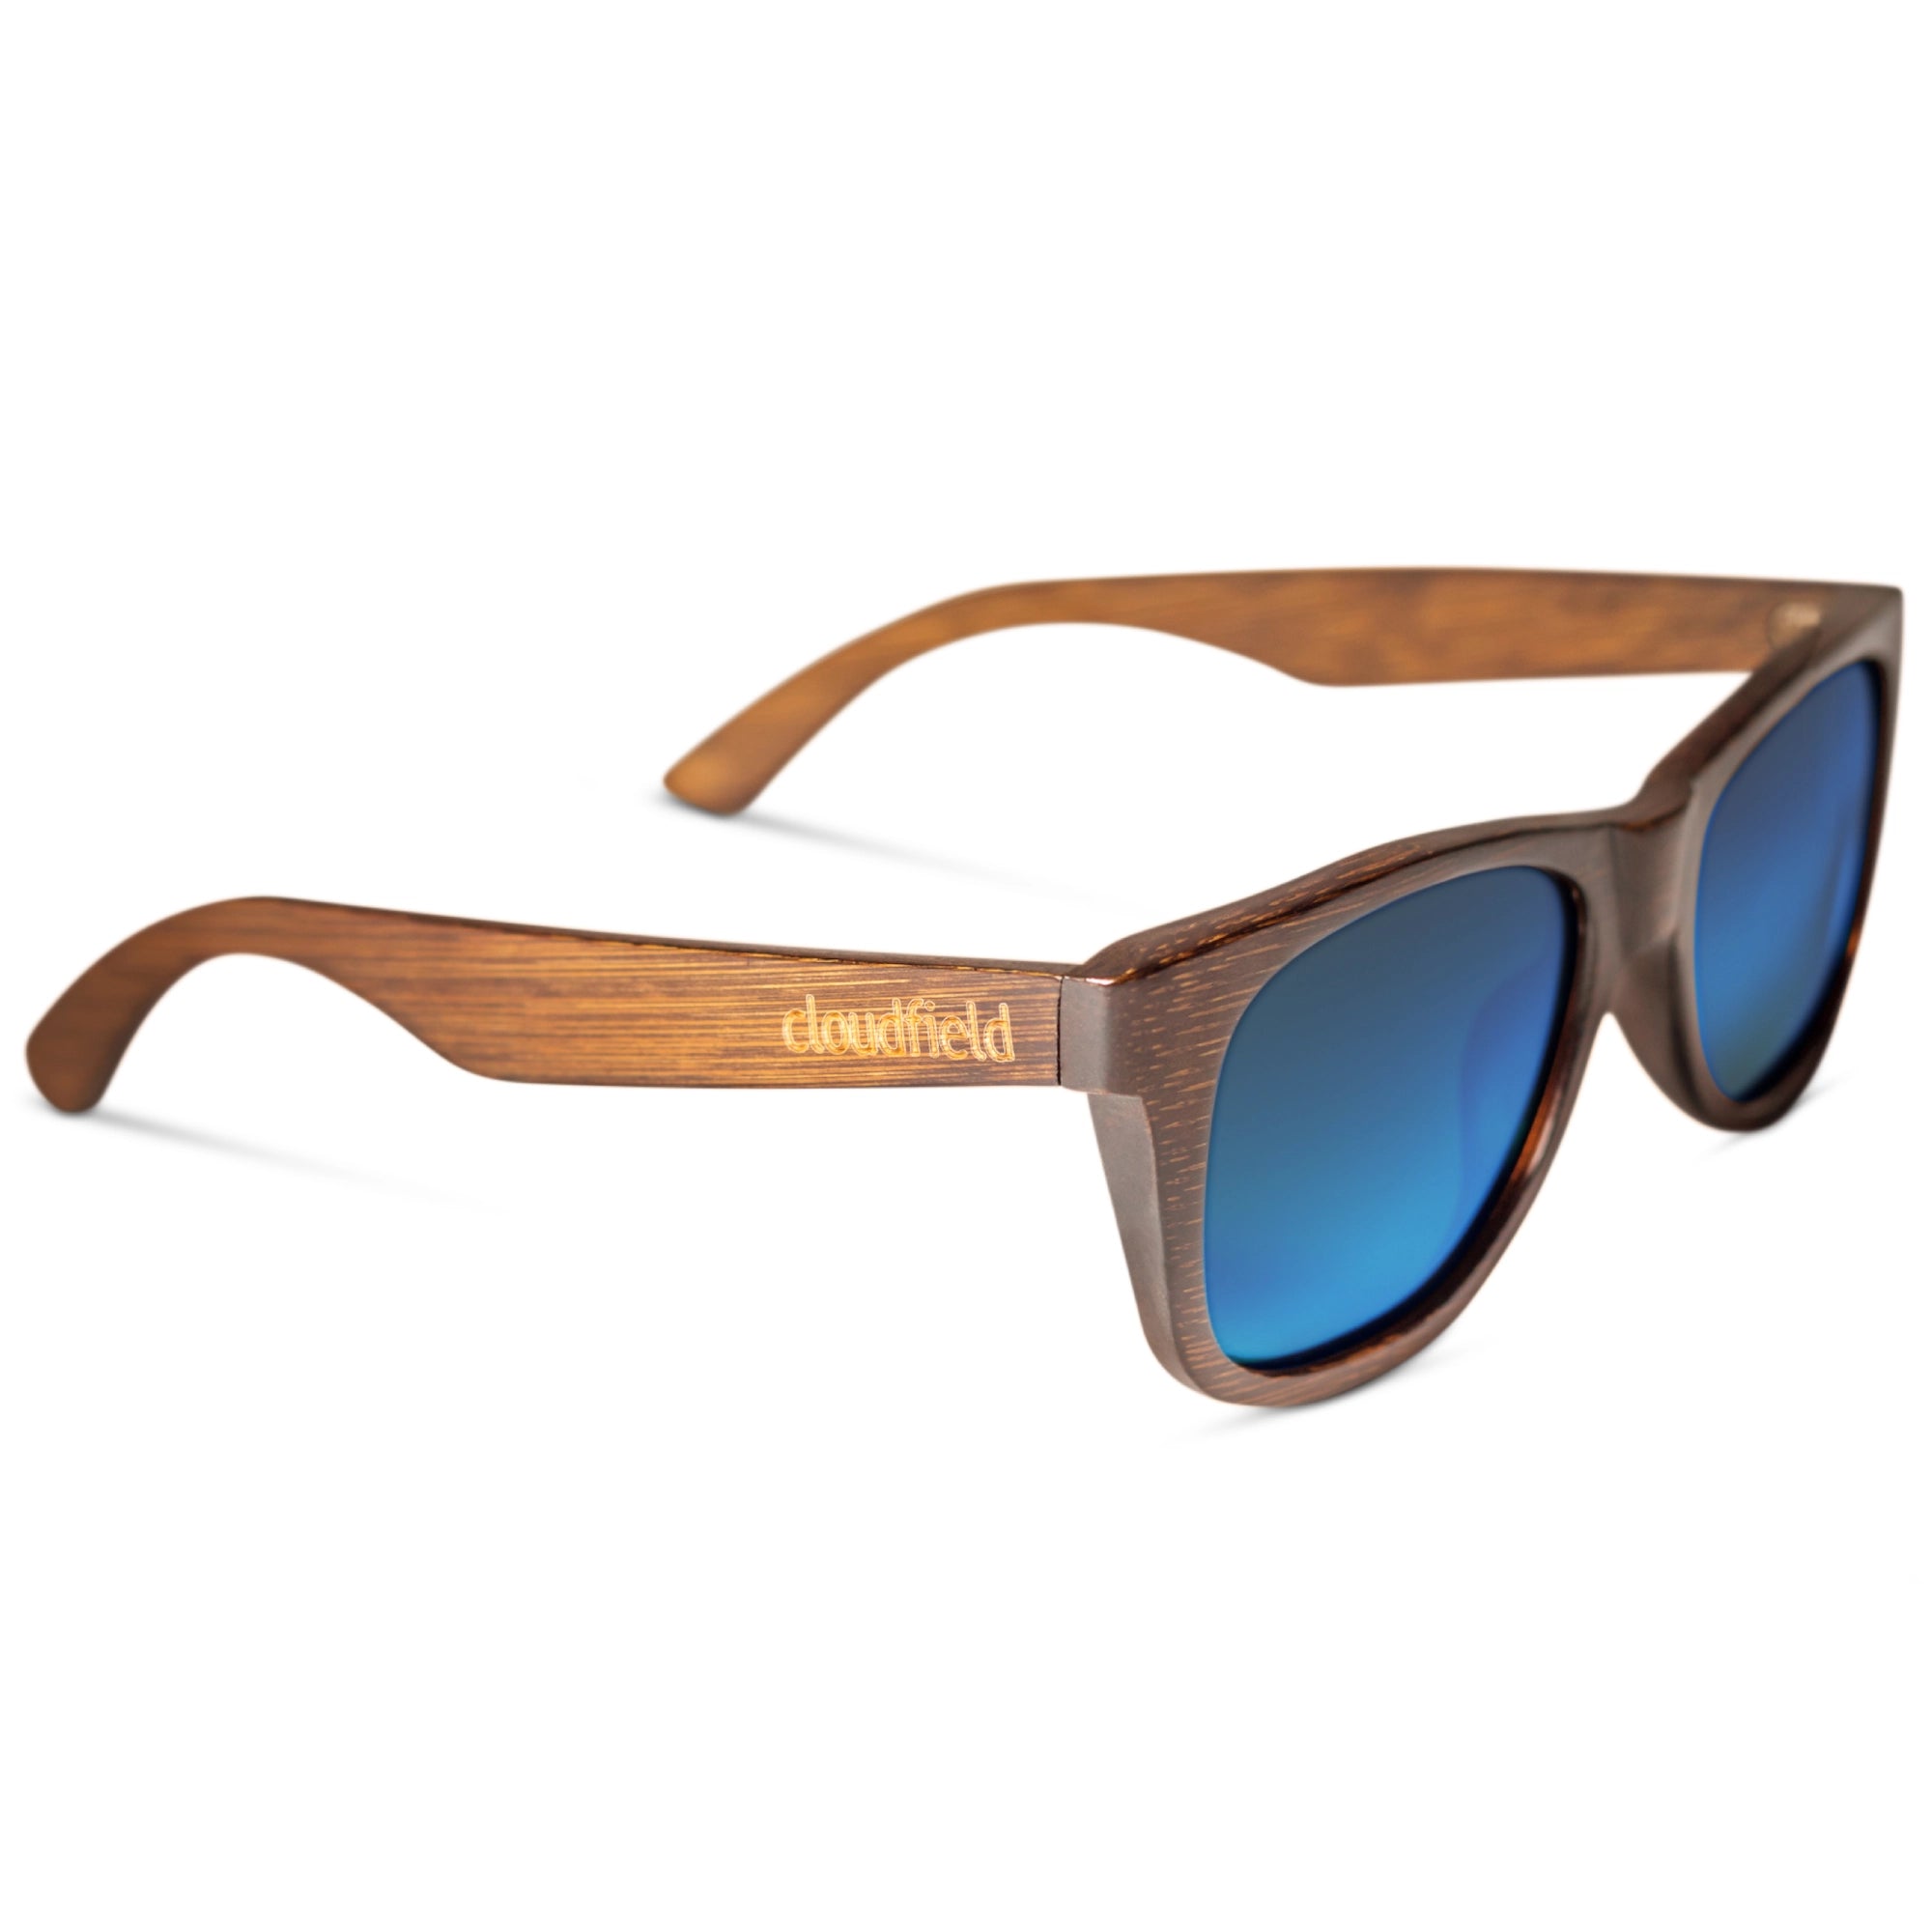 Cloudfield Unisex blue Polarized Wood Sunglasses